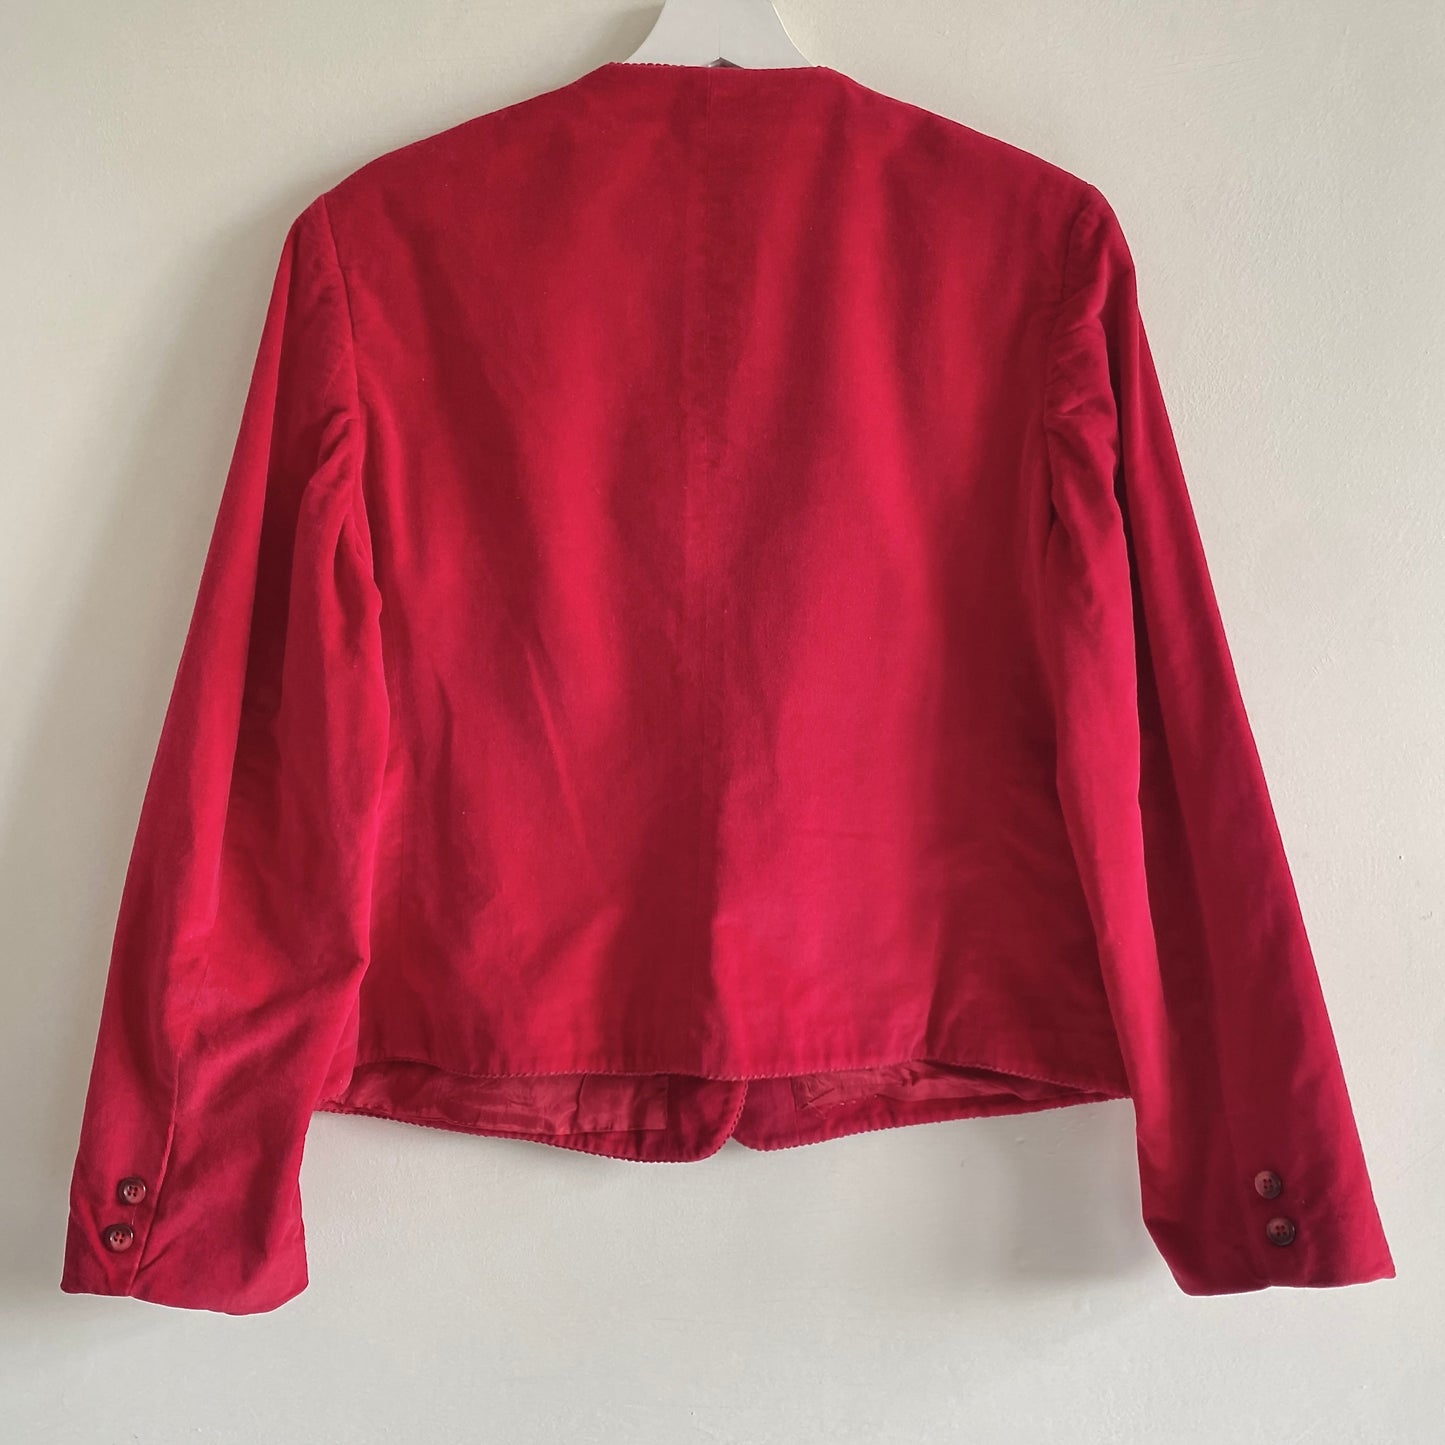 Red Velvet Jacket was £35